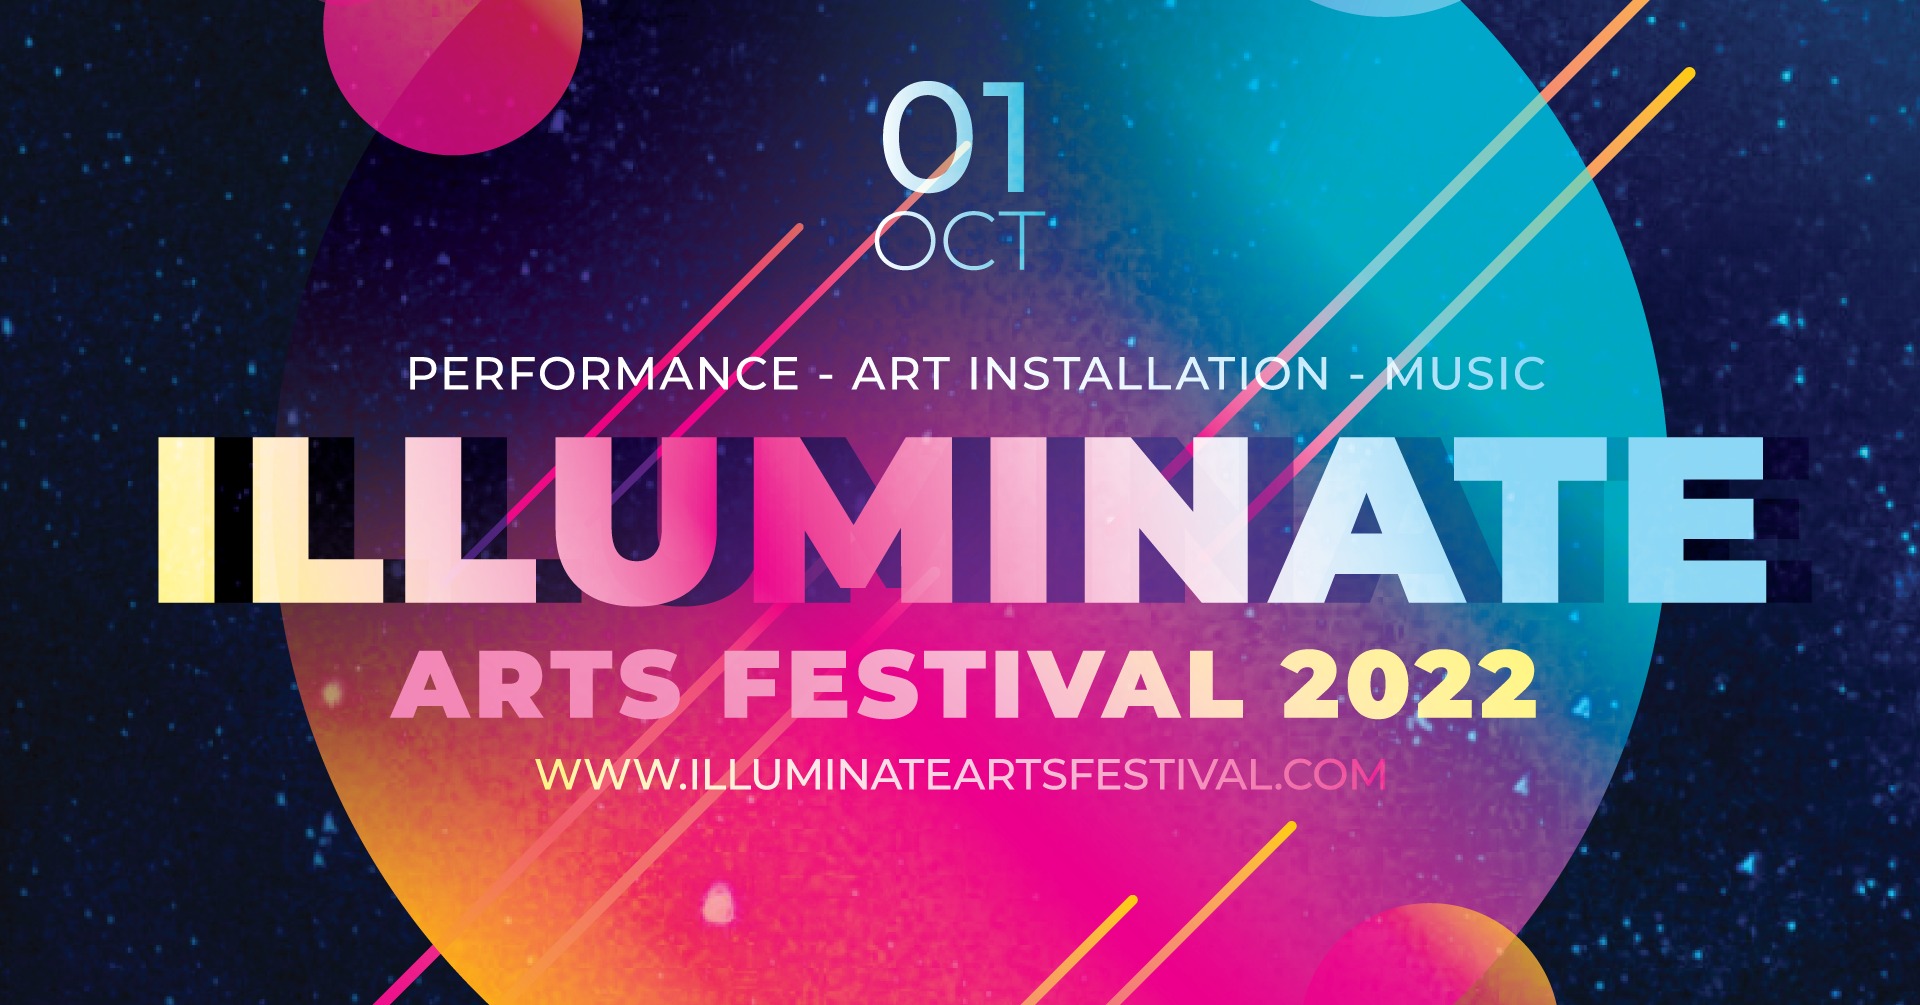 01 October performance, art installation, music. Illuminate Arts Festival 2022 www.illuminateartsfestival.com